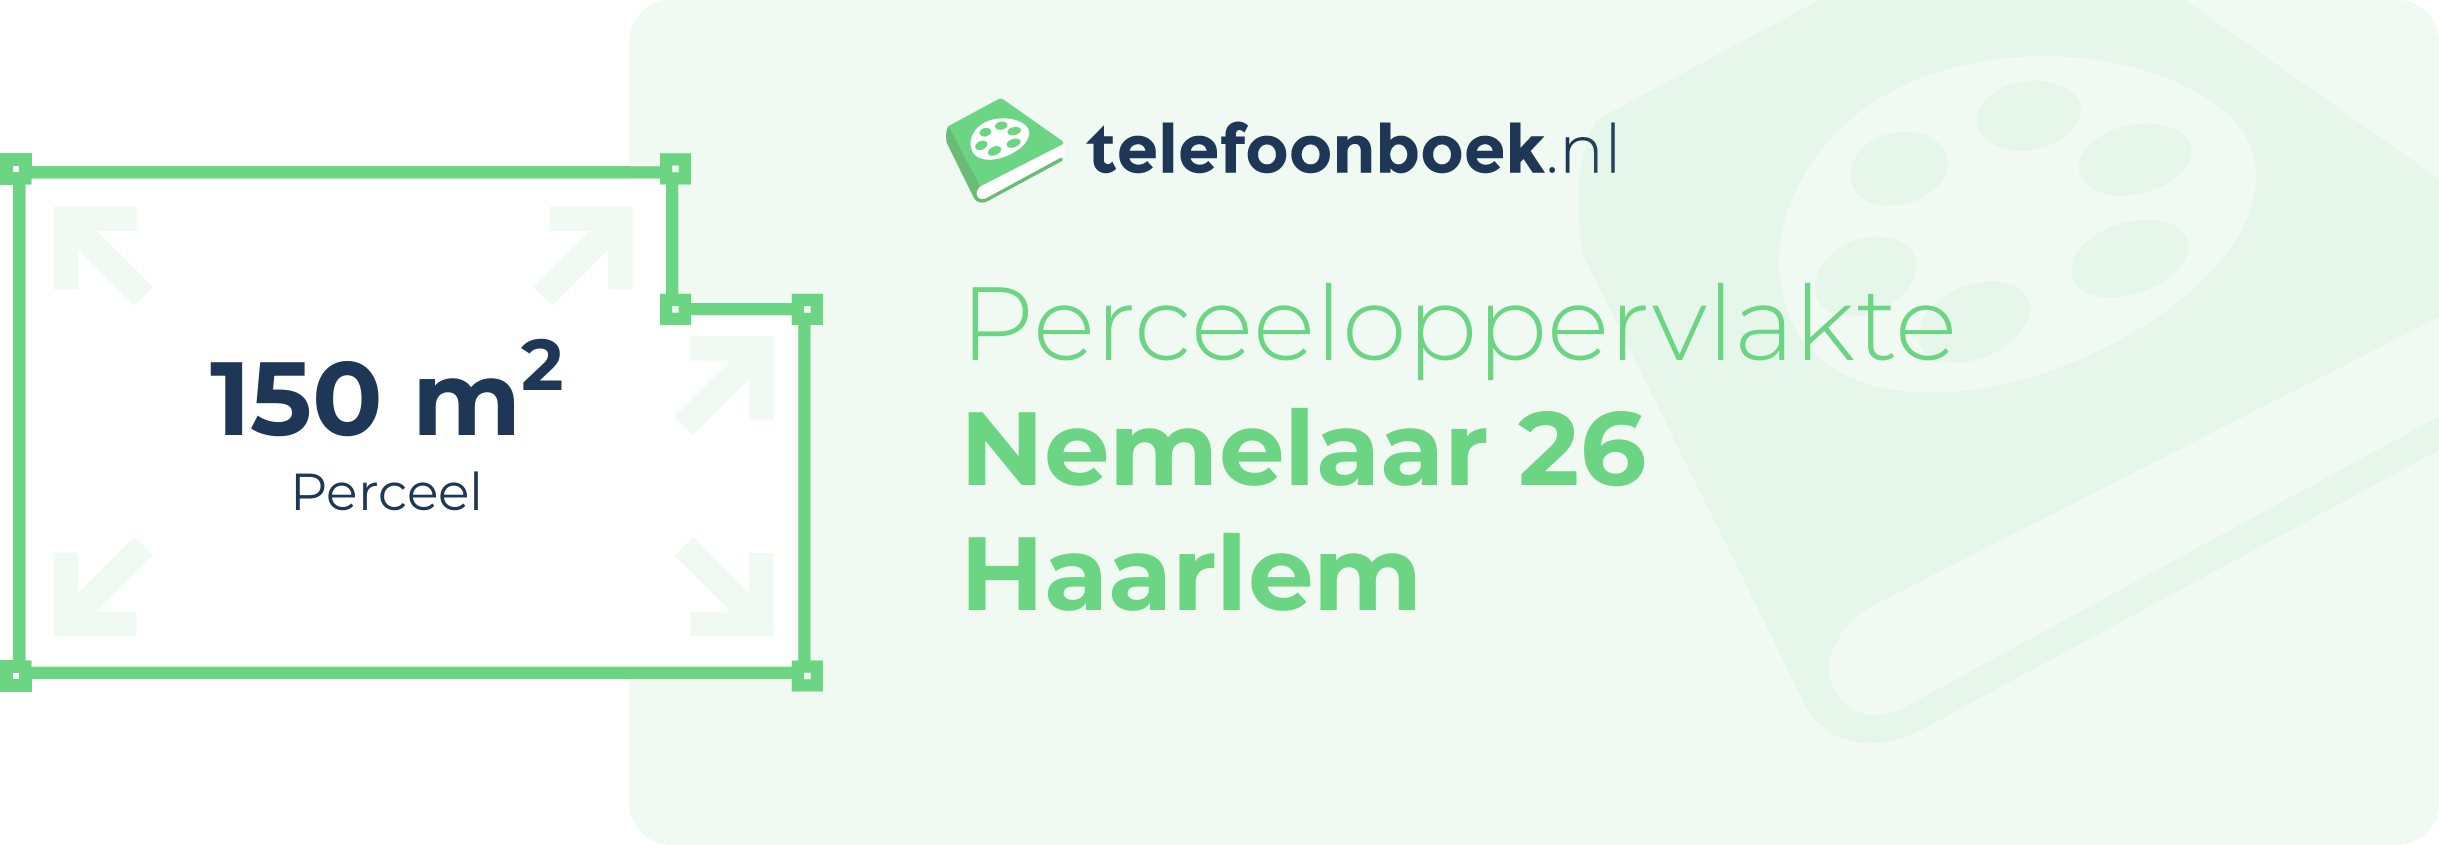 Perceeloppervlakte Nemelaar 26 Haarlem